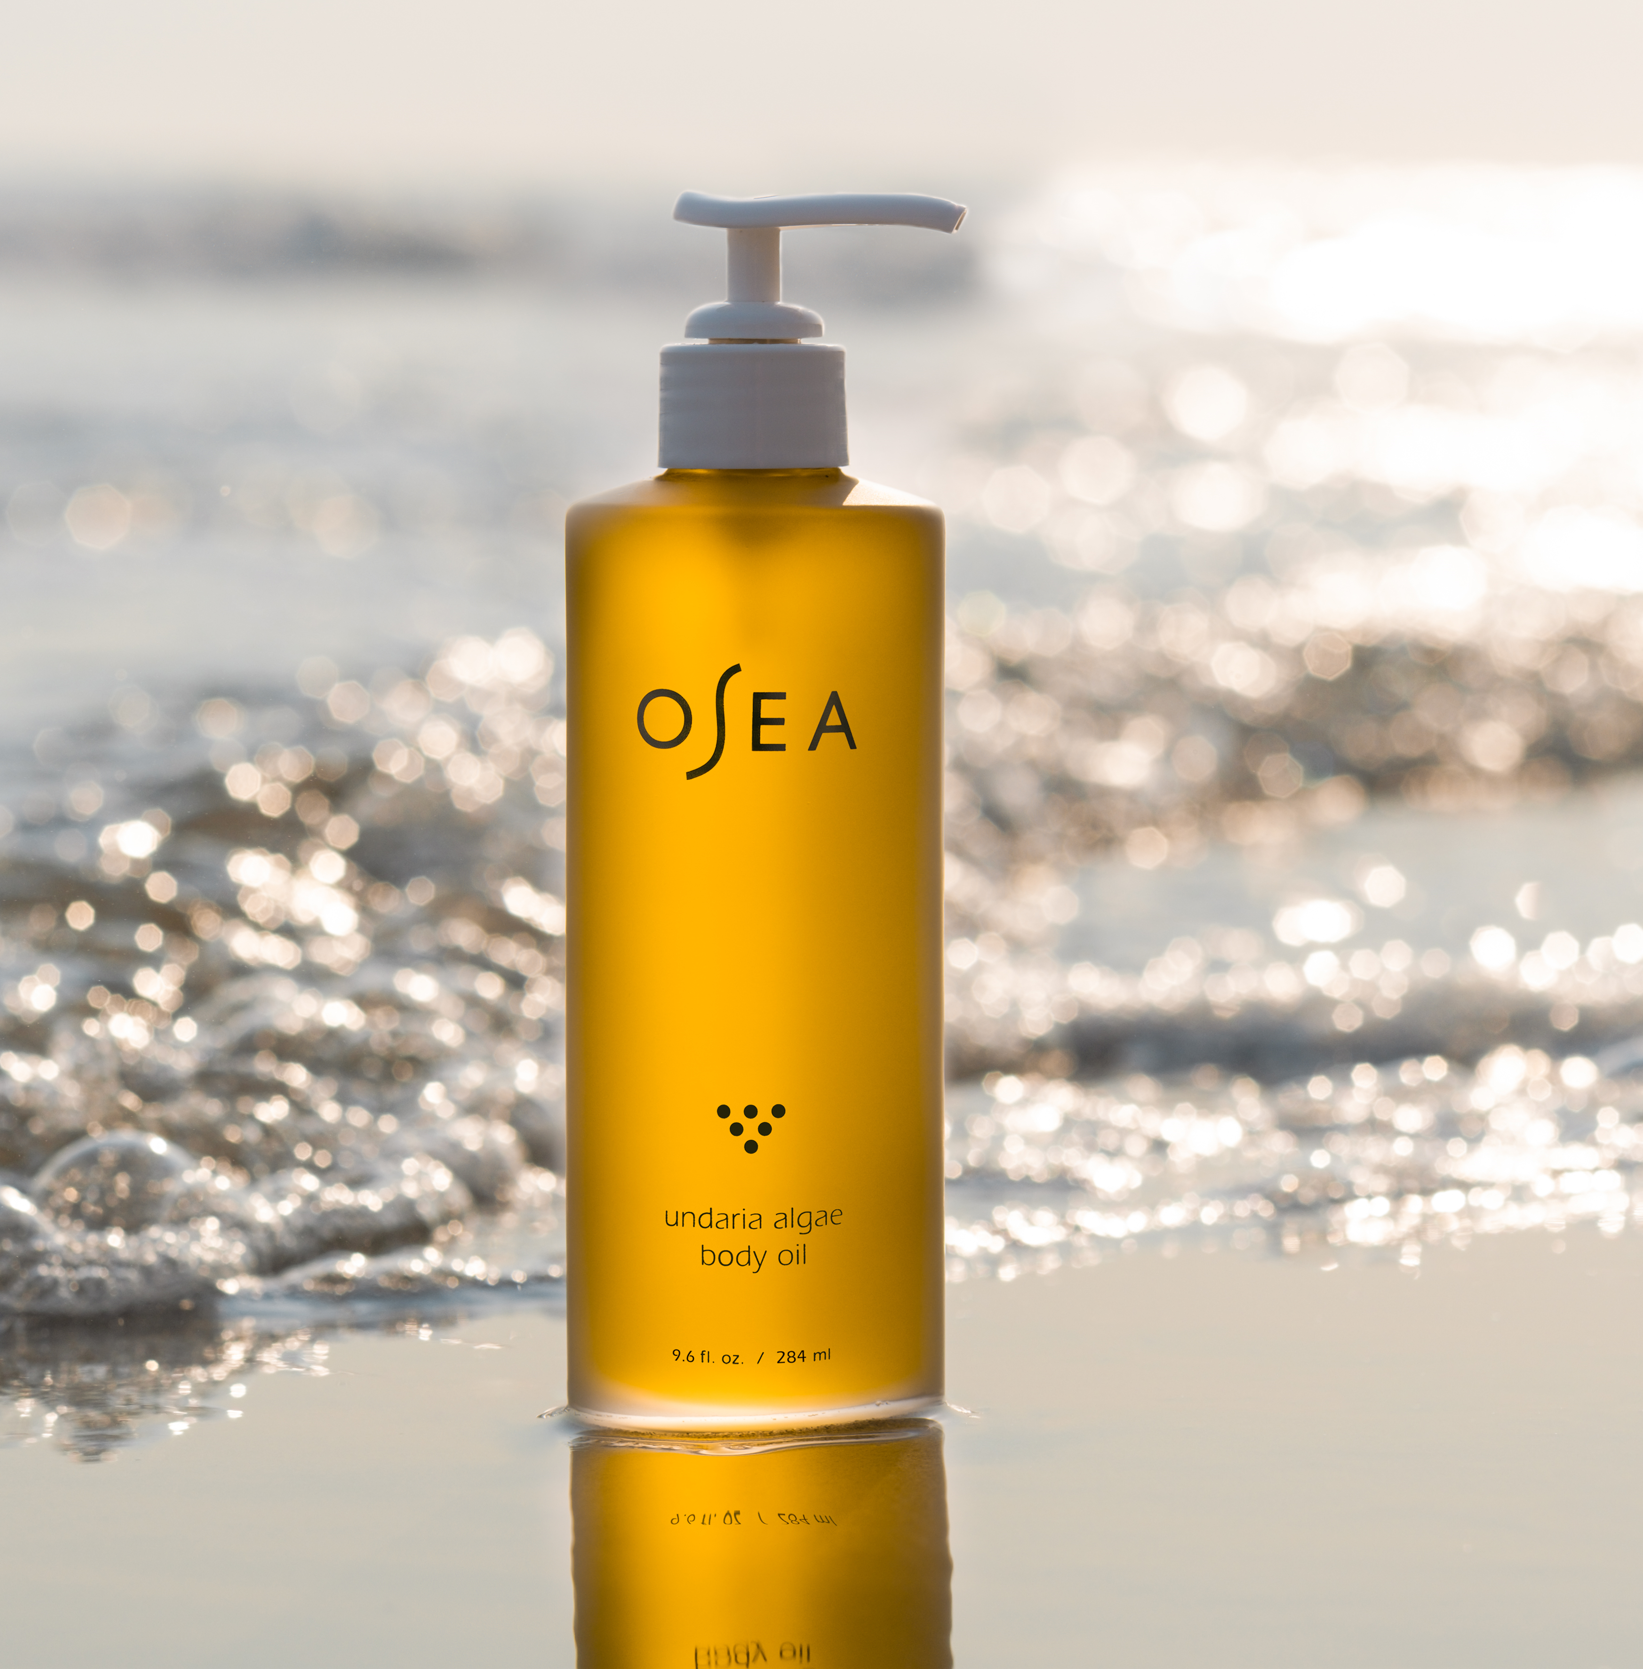 Bottle of Osea Undaria algae body oil